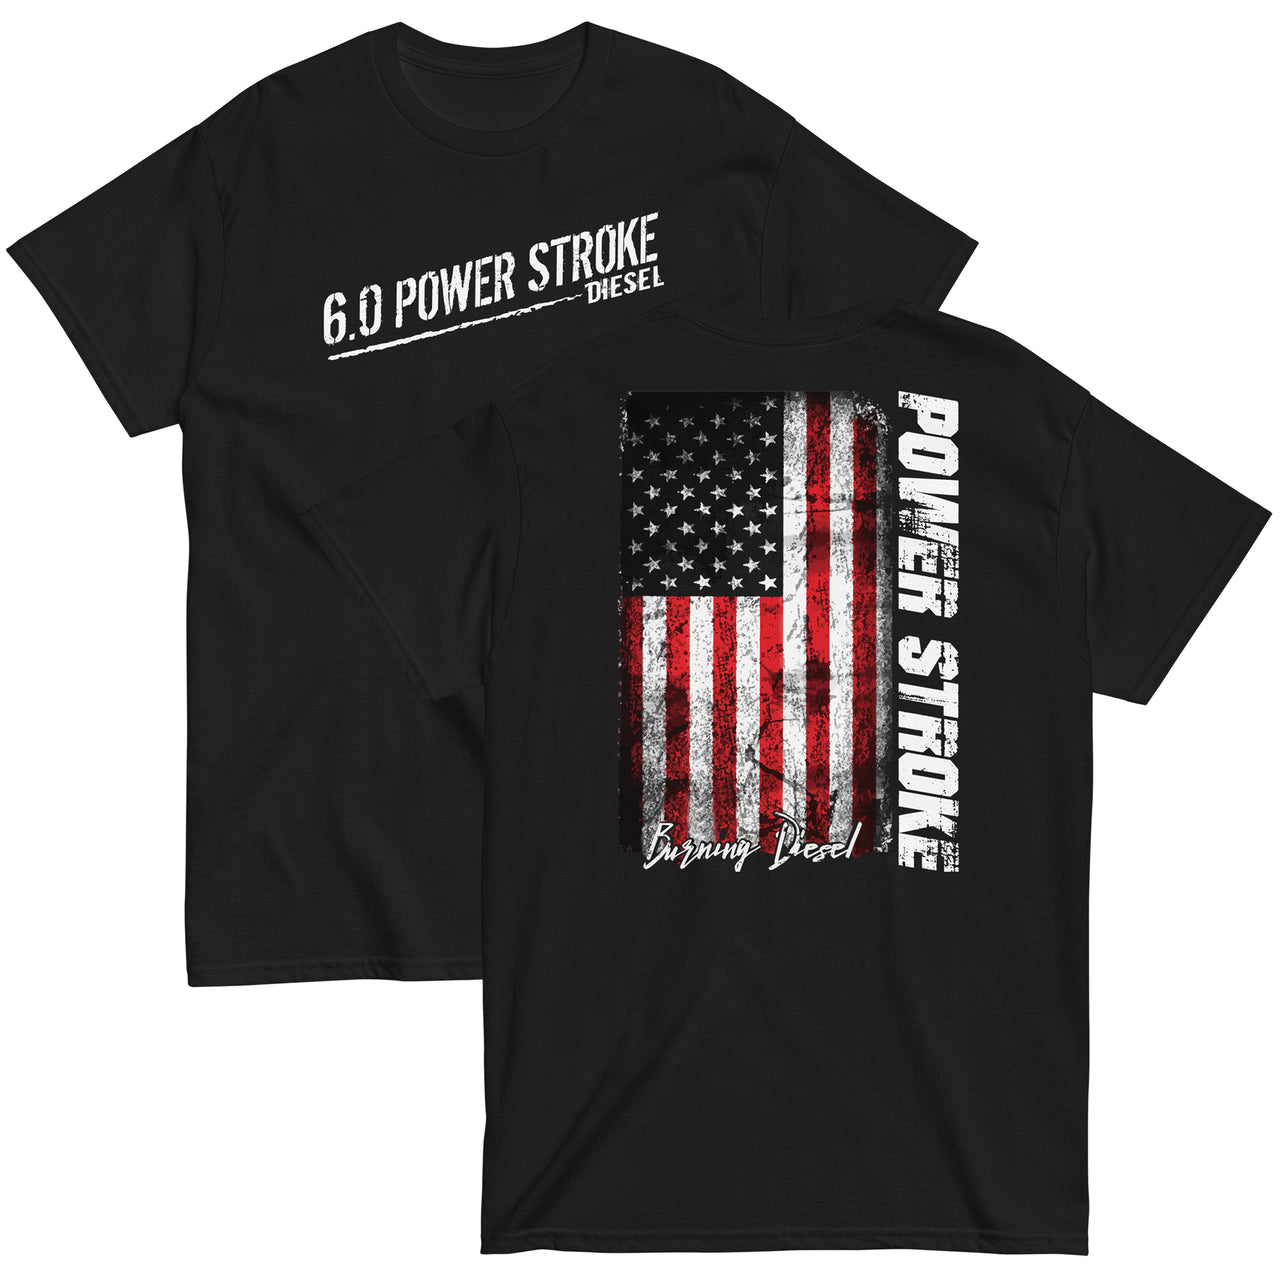 6.0 Powerstroke American Flag T-Shirt in black